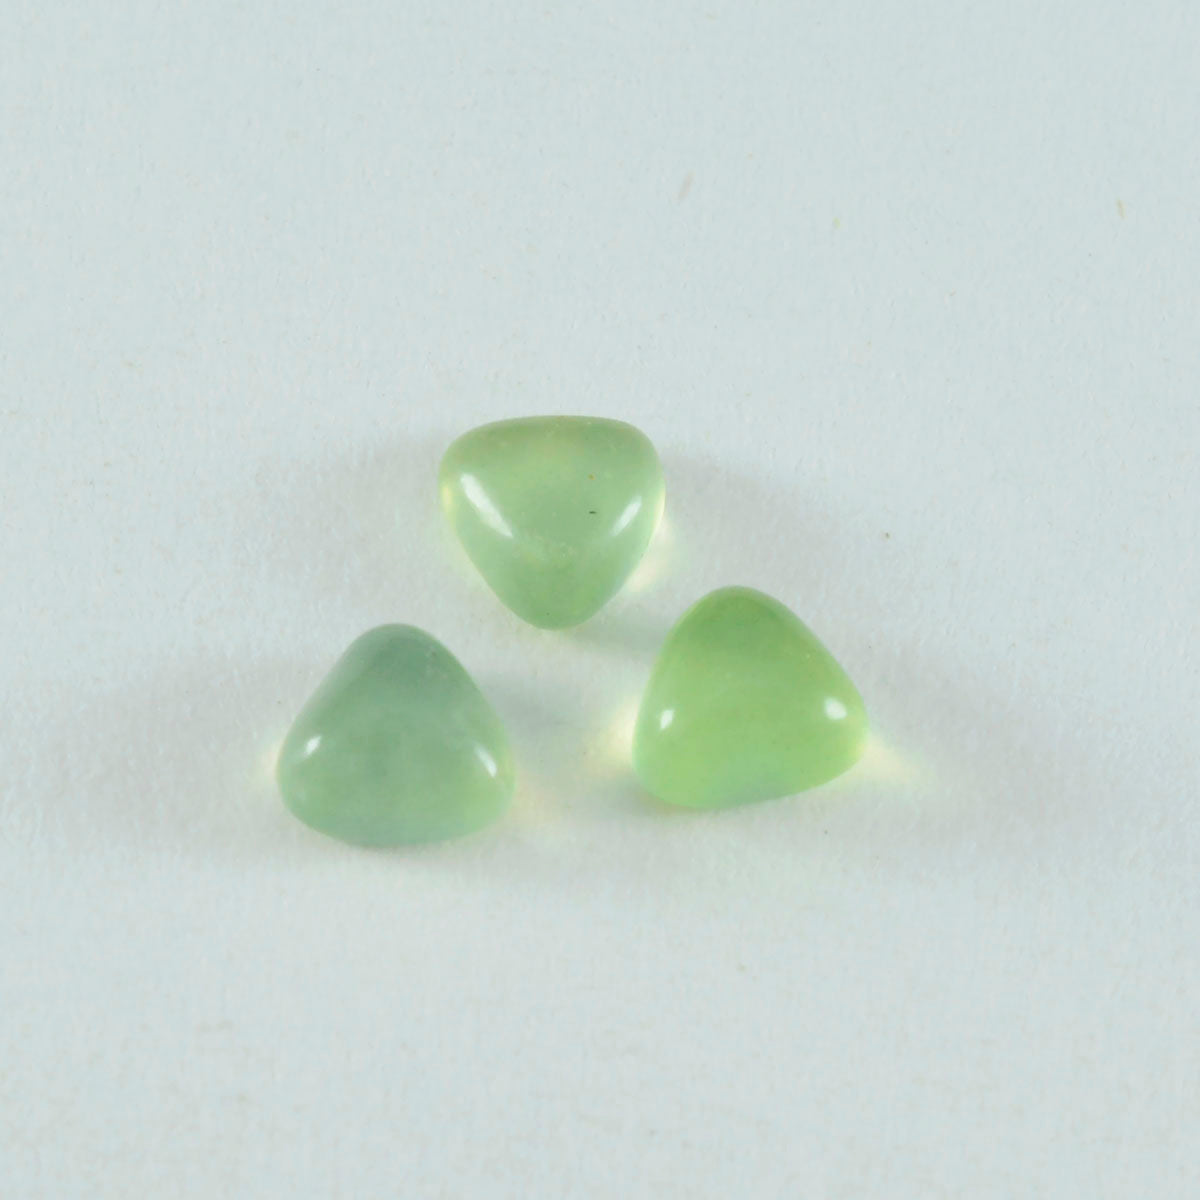 riyogems 1pc グリーン プレナイト カボション 12x12 mm 兆型の驚くべき品質のルース宝石